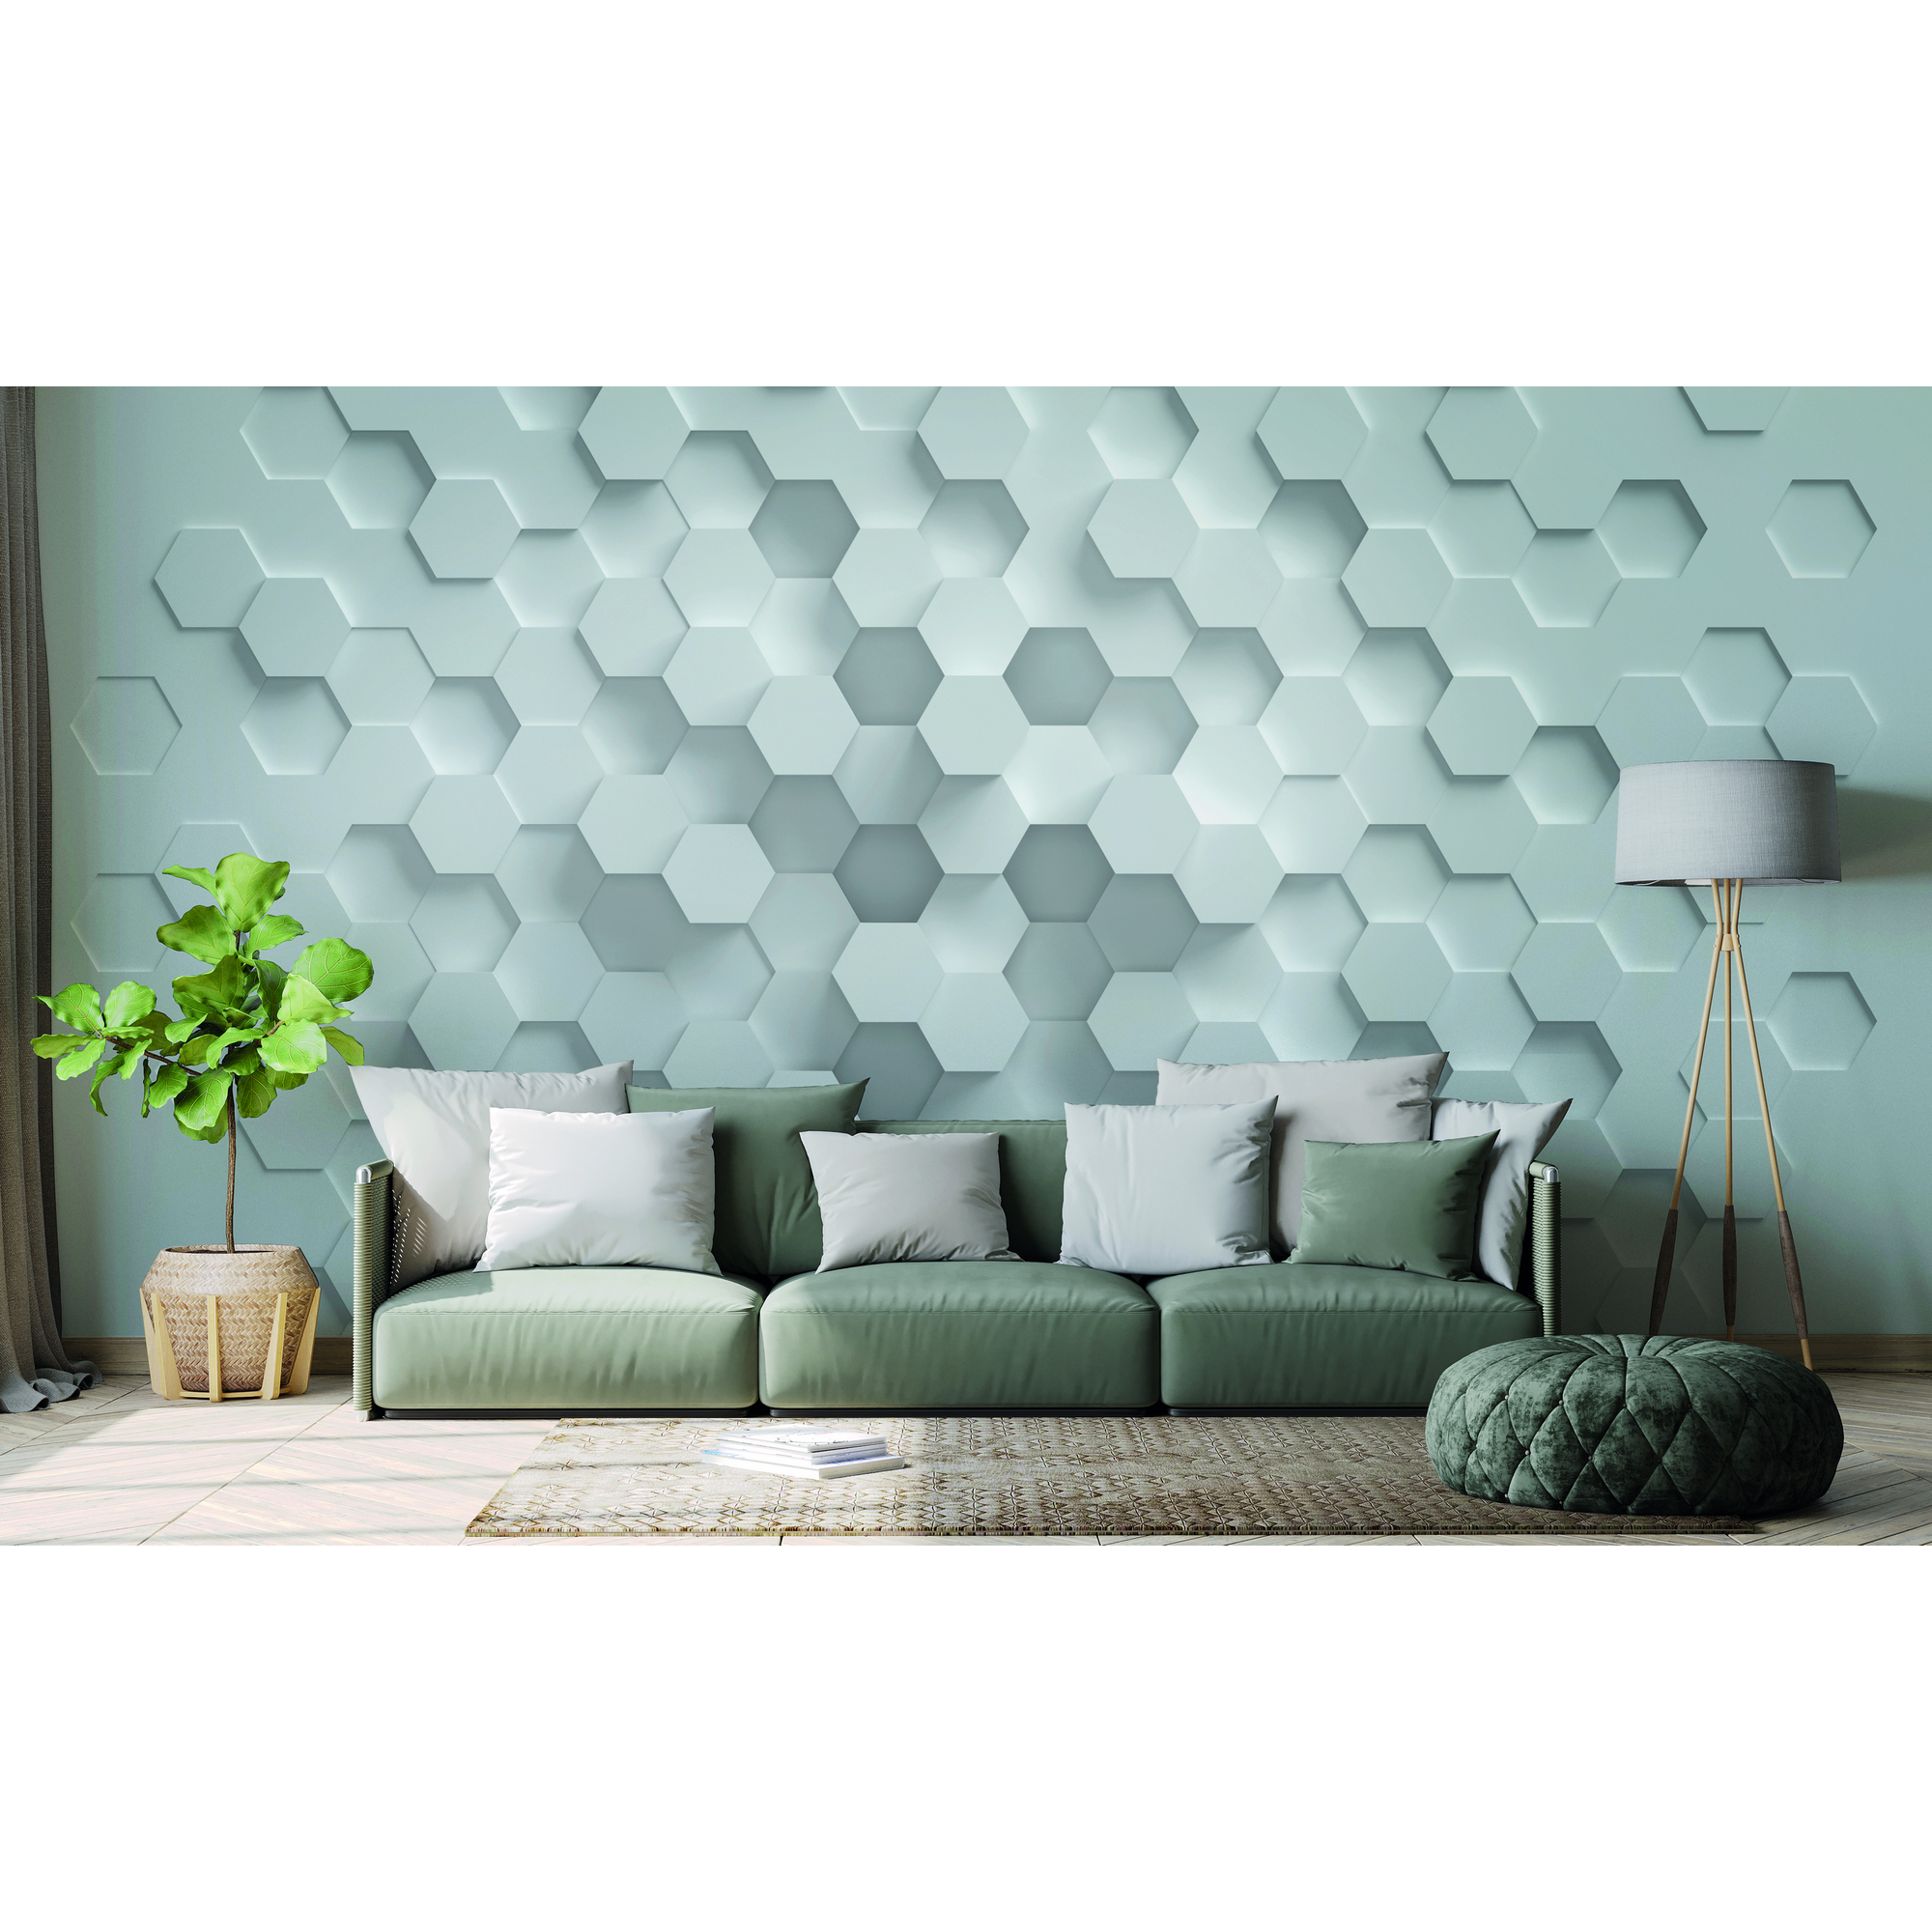 Vliestapete 'The Wall' Waben 7er-Panel grau/weiß 371 x 280 cm + product picture